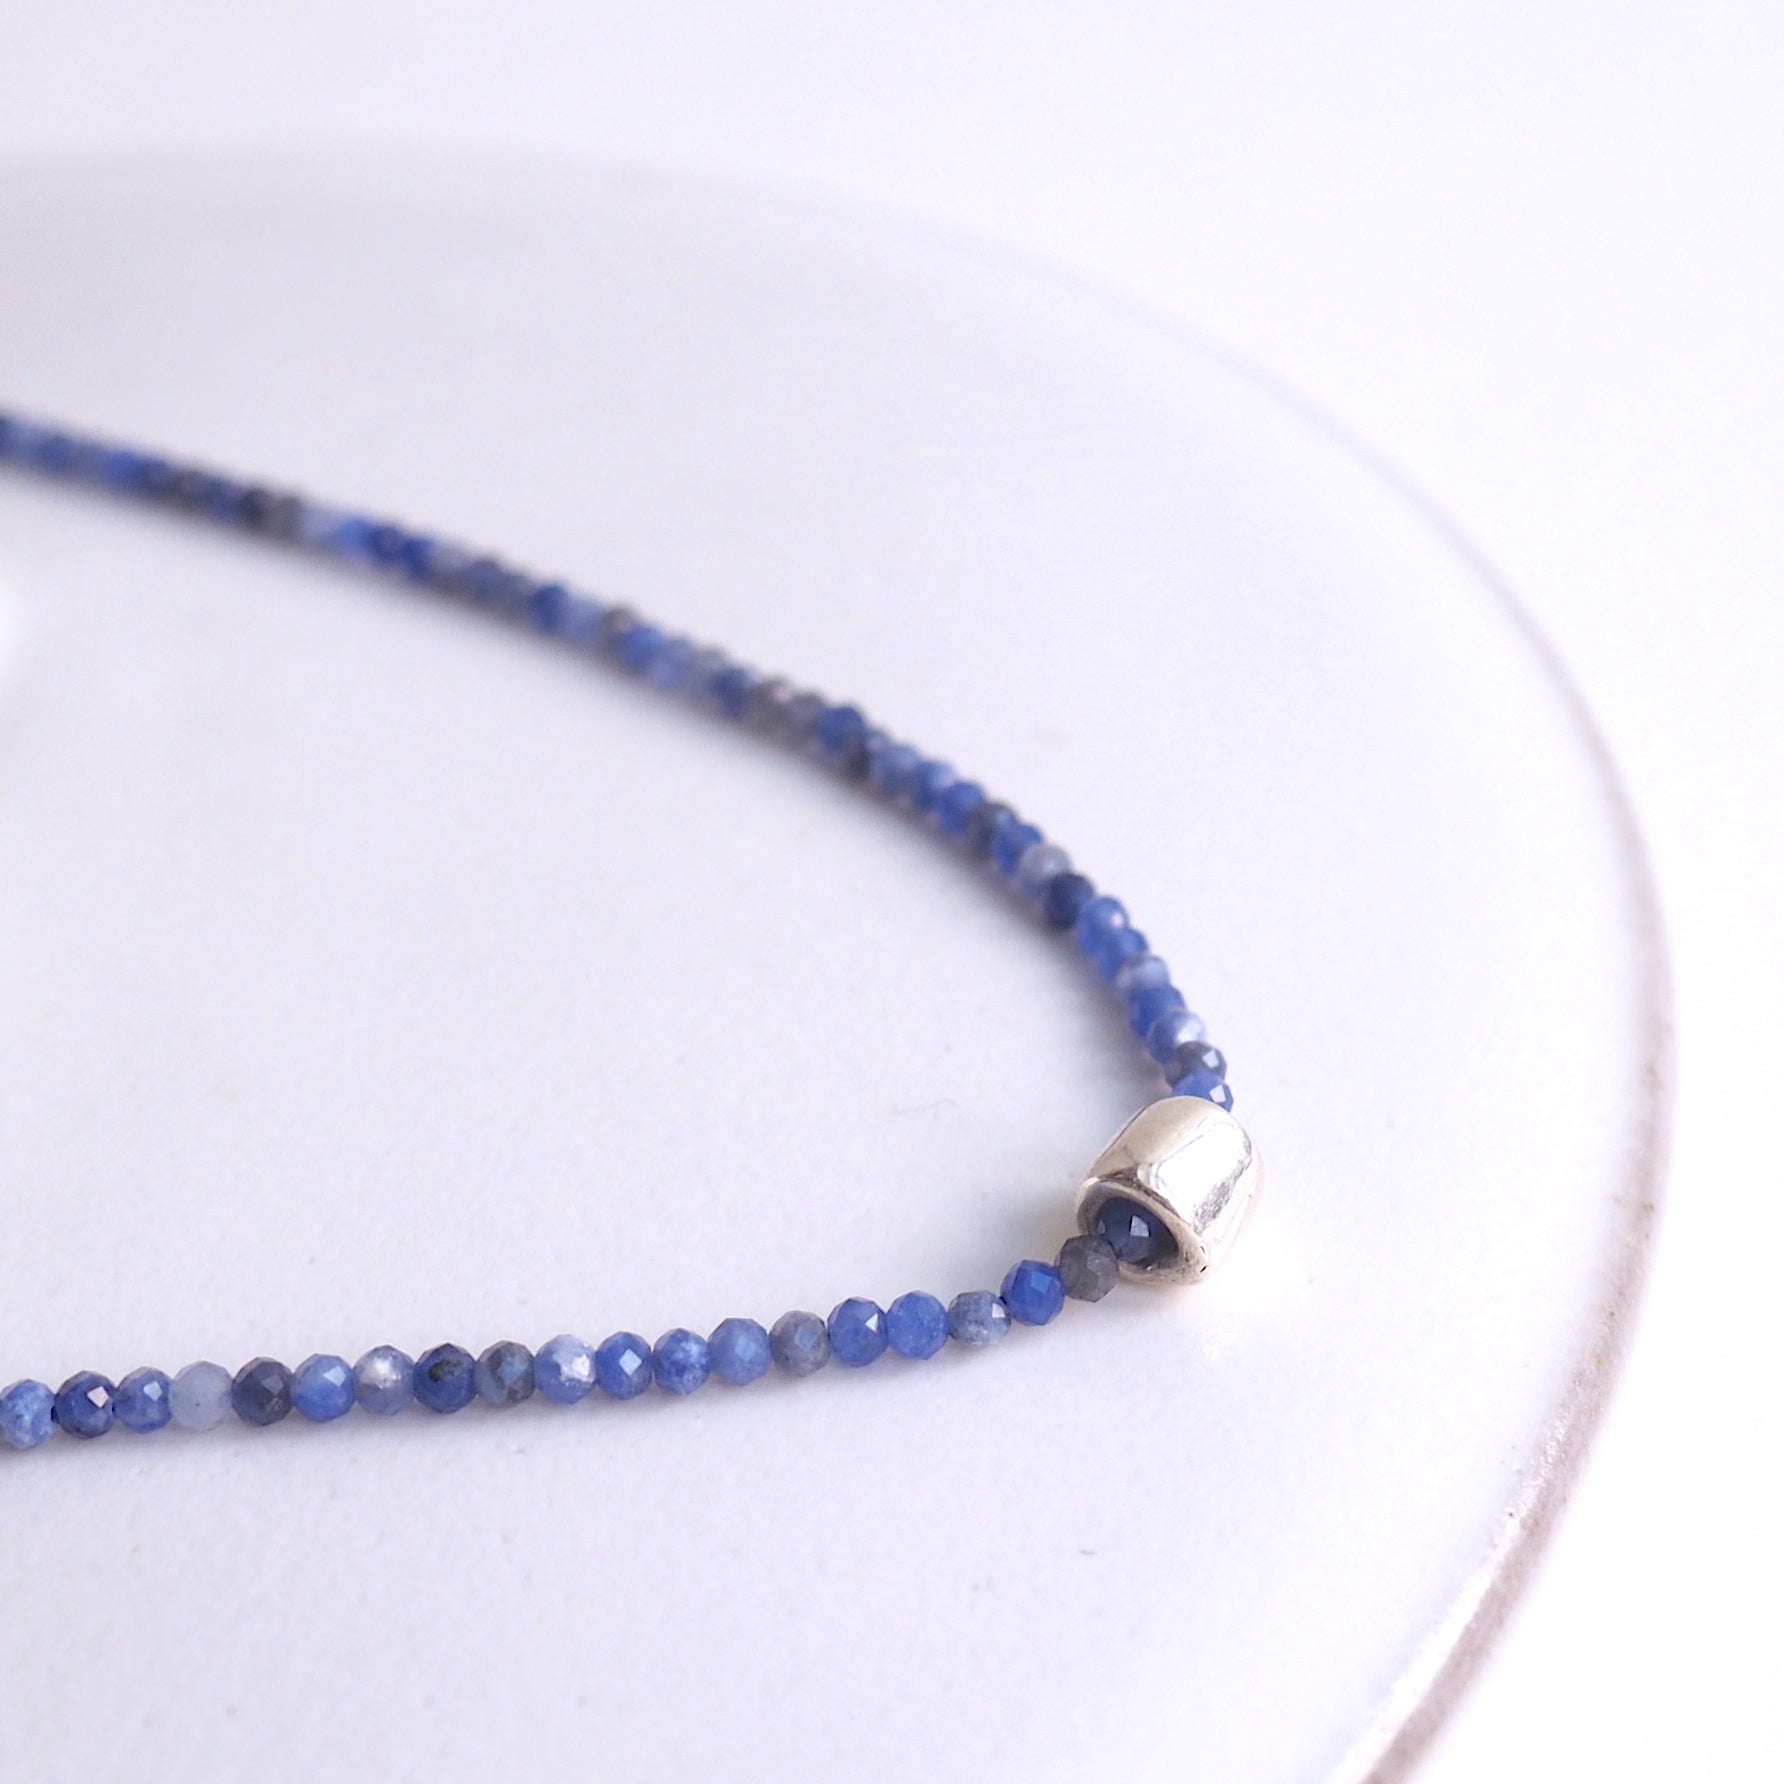 Necklace jewelry Silver handmade unique custom bespoke blue ocean sodalite stone silver gold design fashion